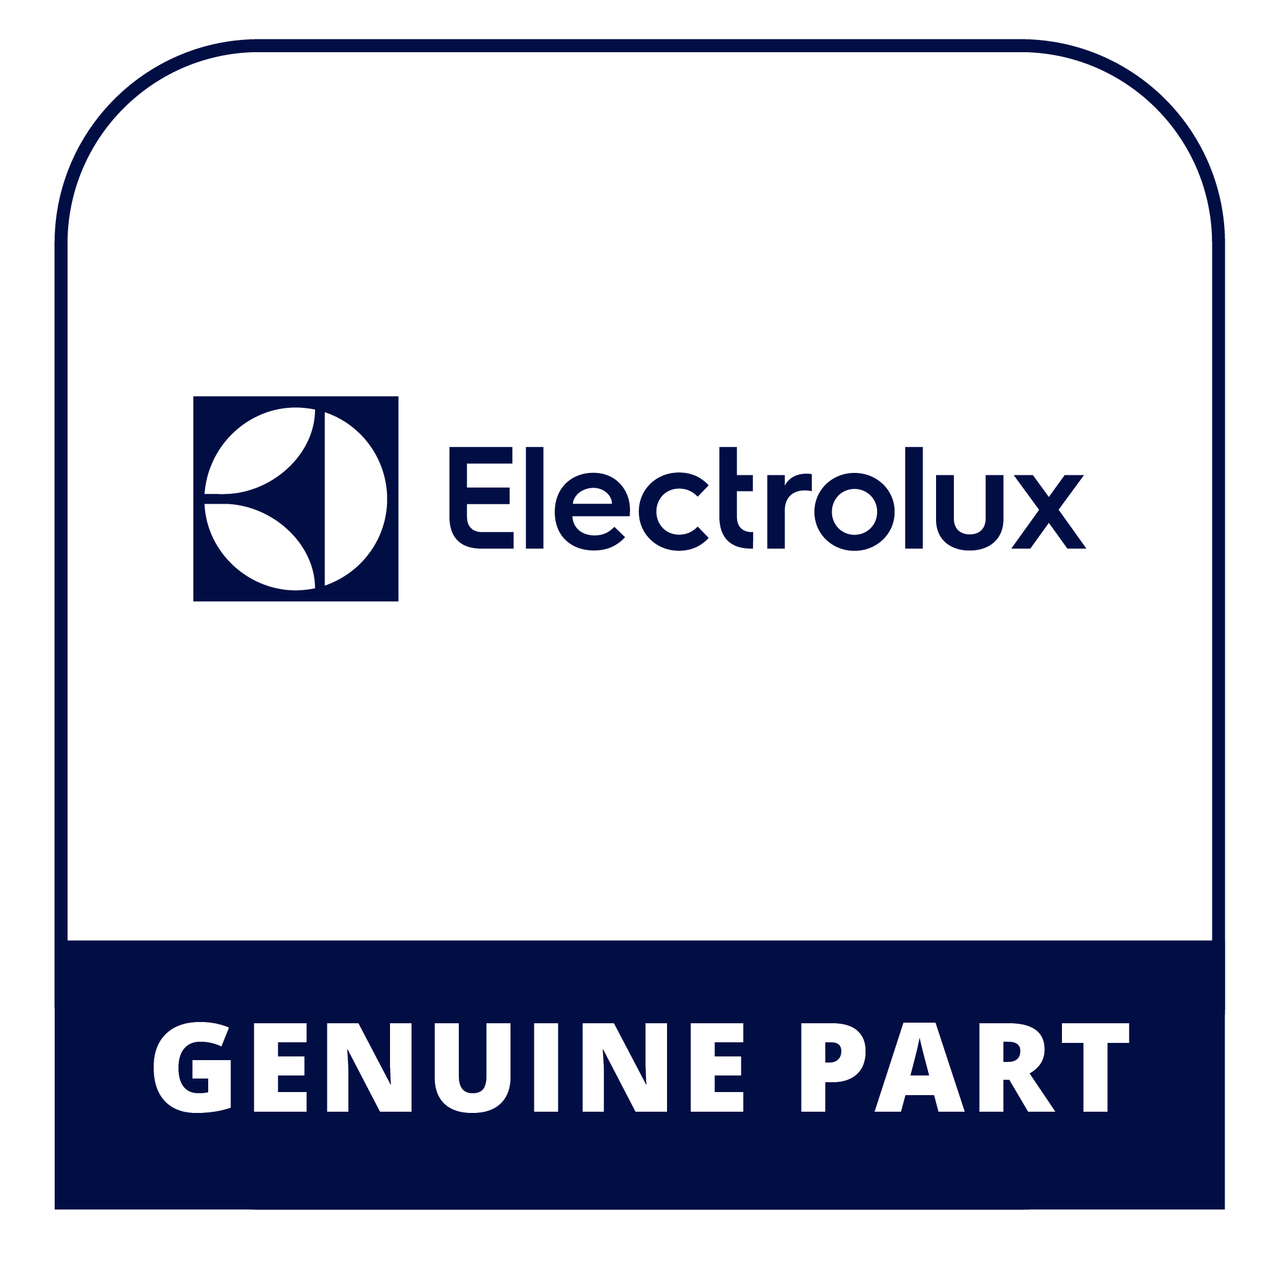 Frigidaire - Electrolux 240323973 - Label-Module Cover - Genuine Electrolux Part